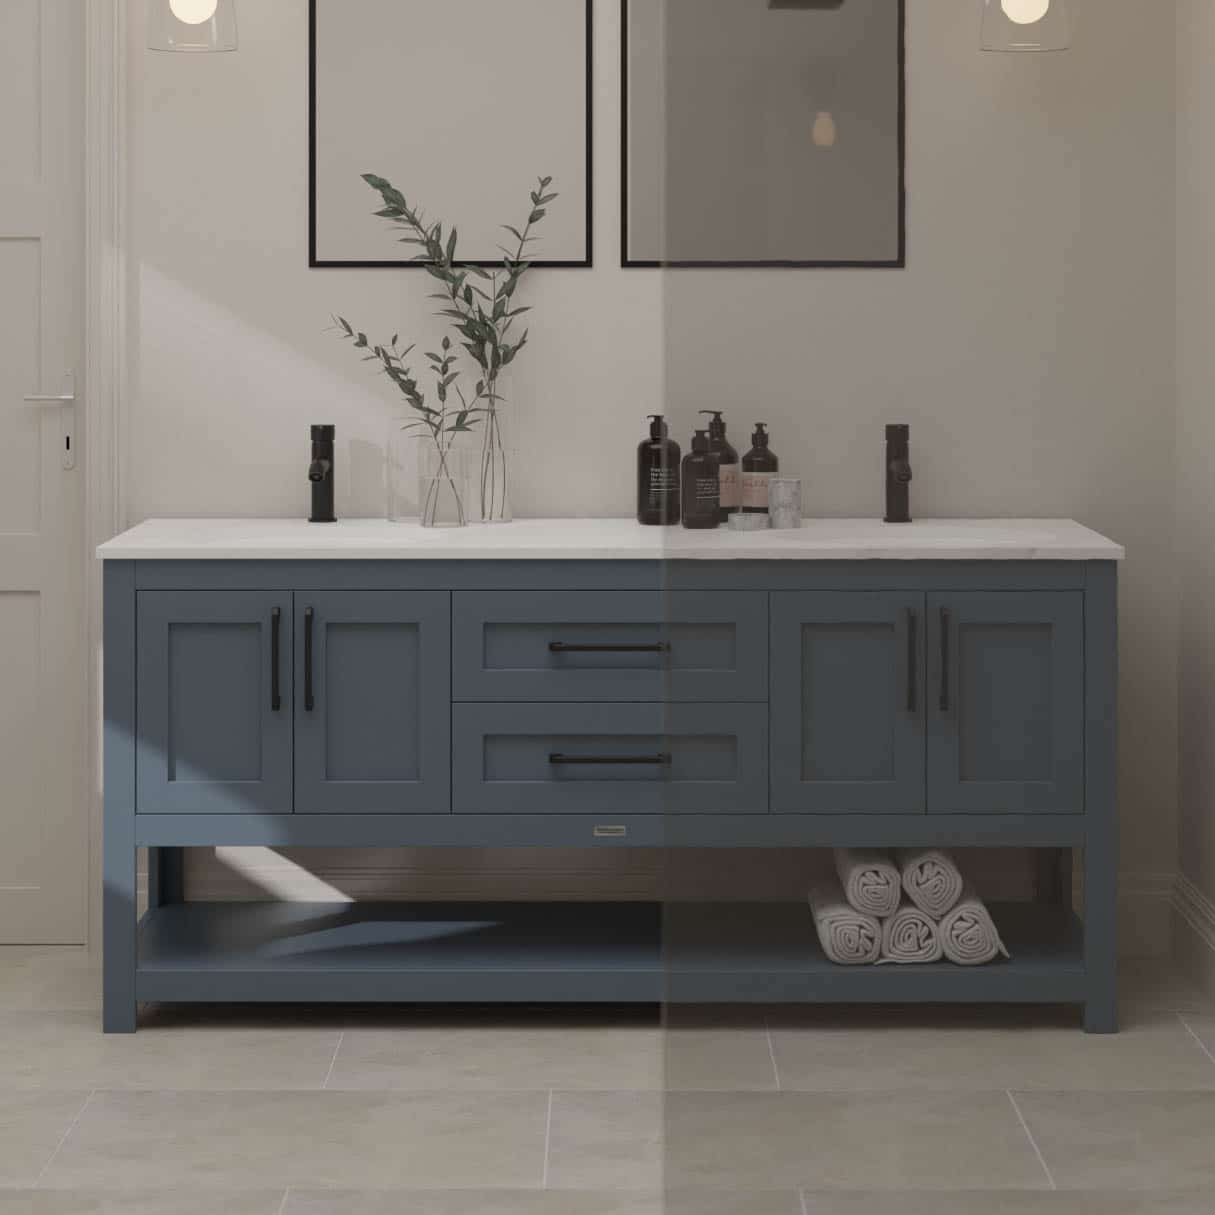 double basin vanity unit
